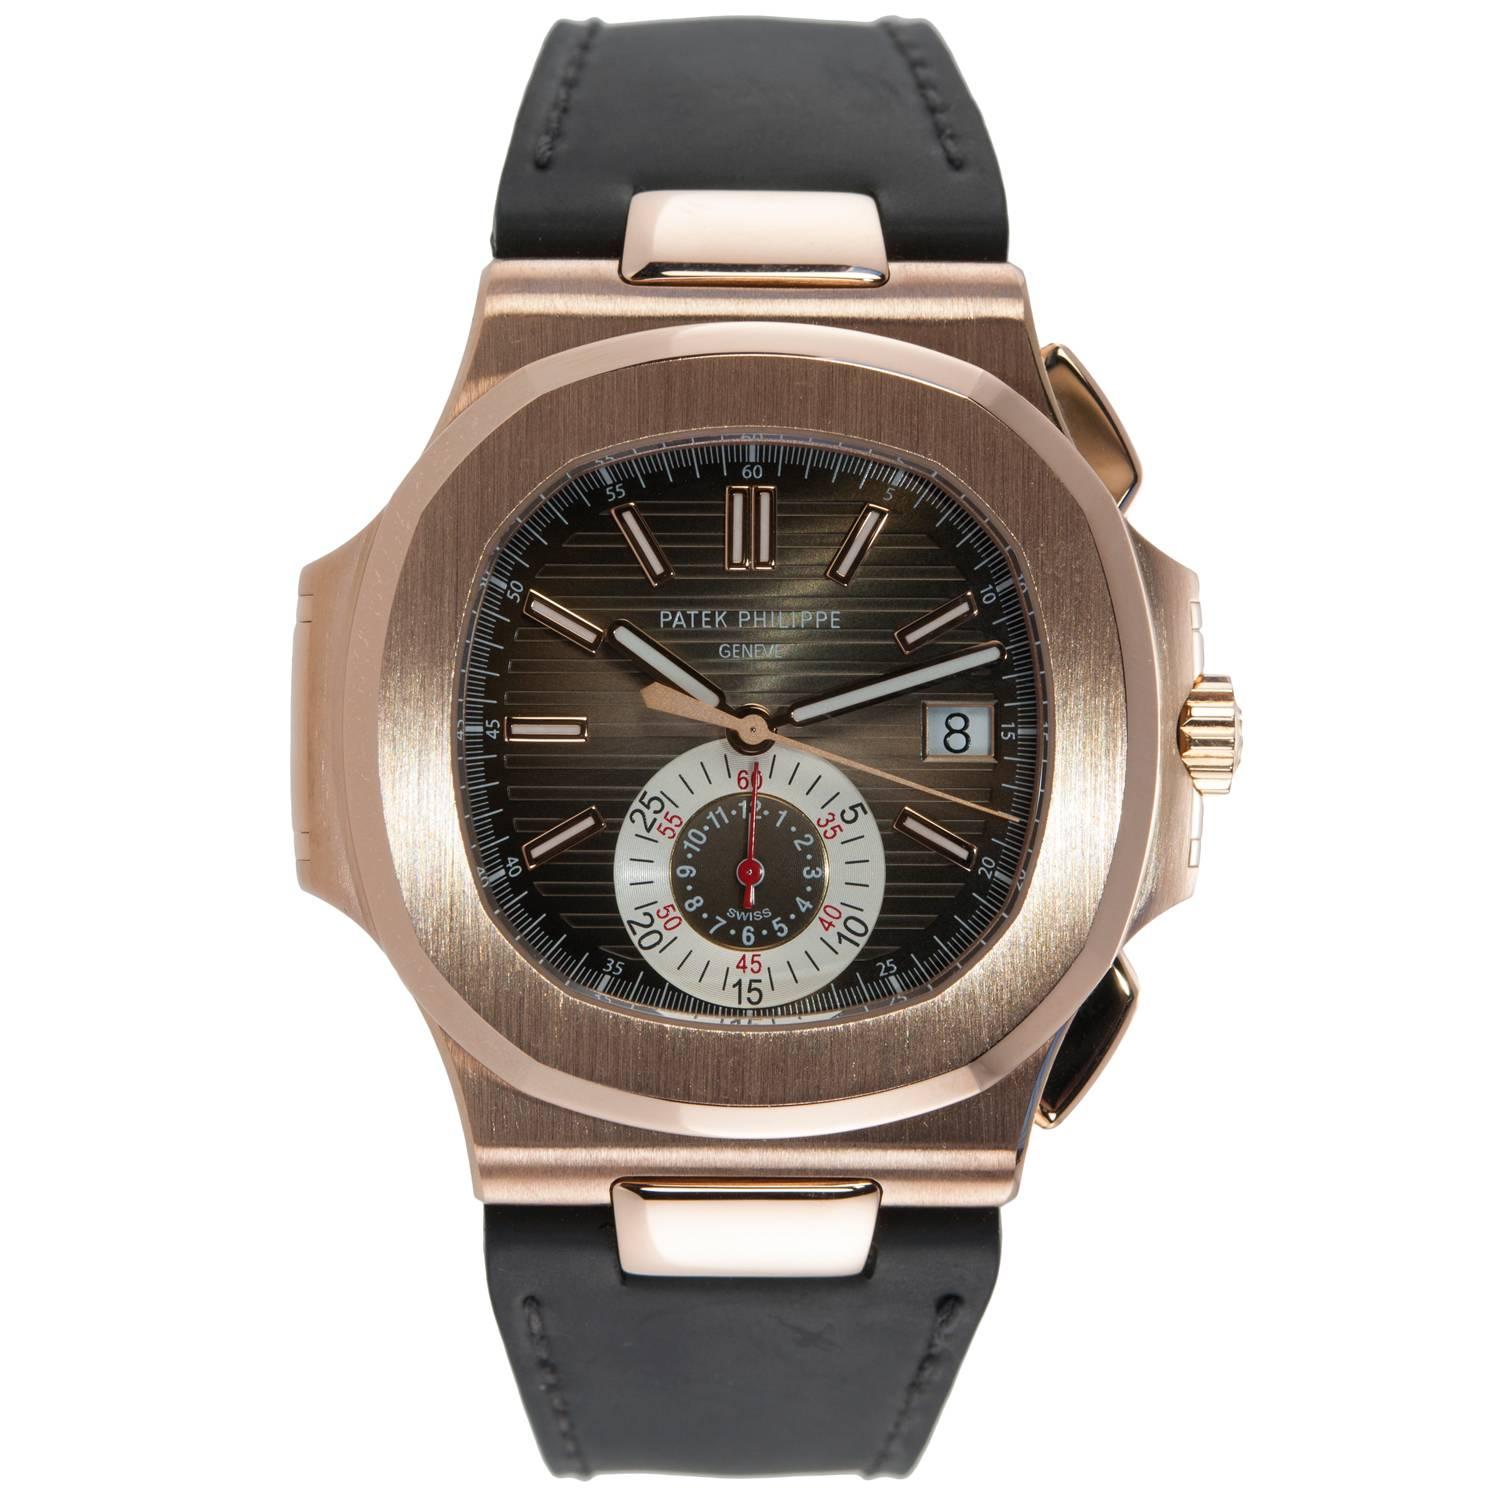 Patek Philippe rose gold Nautilus Chronograph Wristwatch ref 5980R For Sale